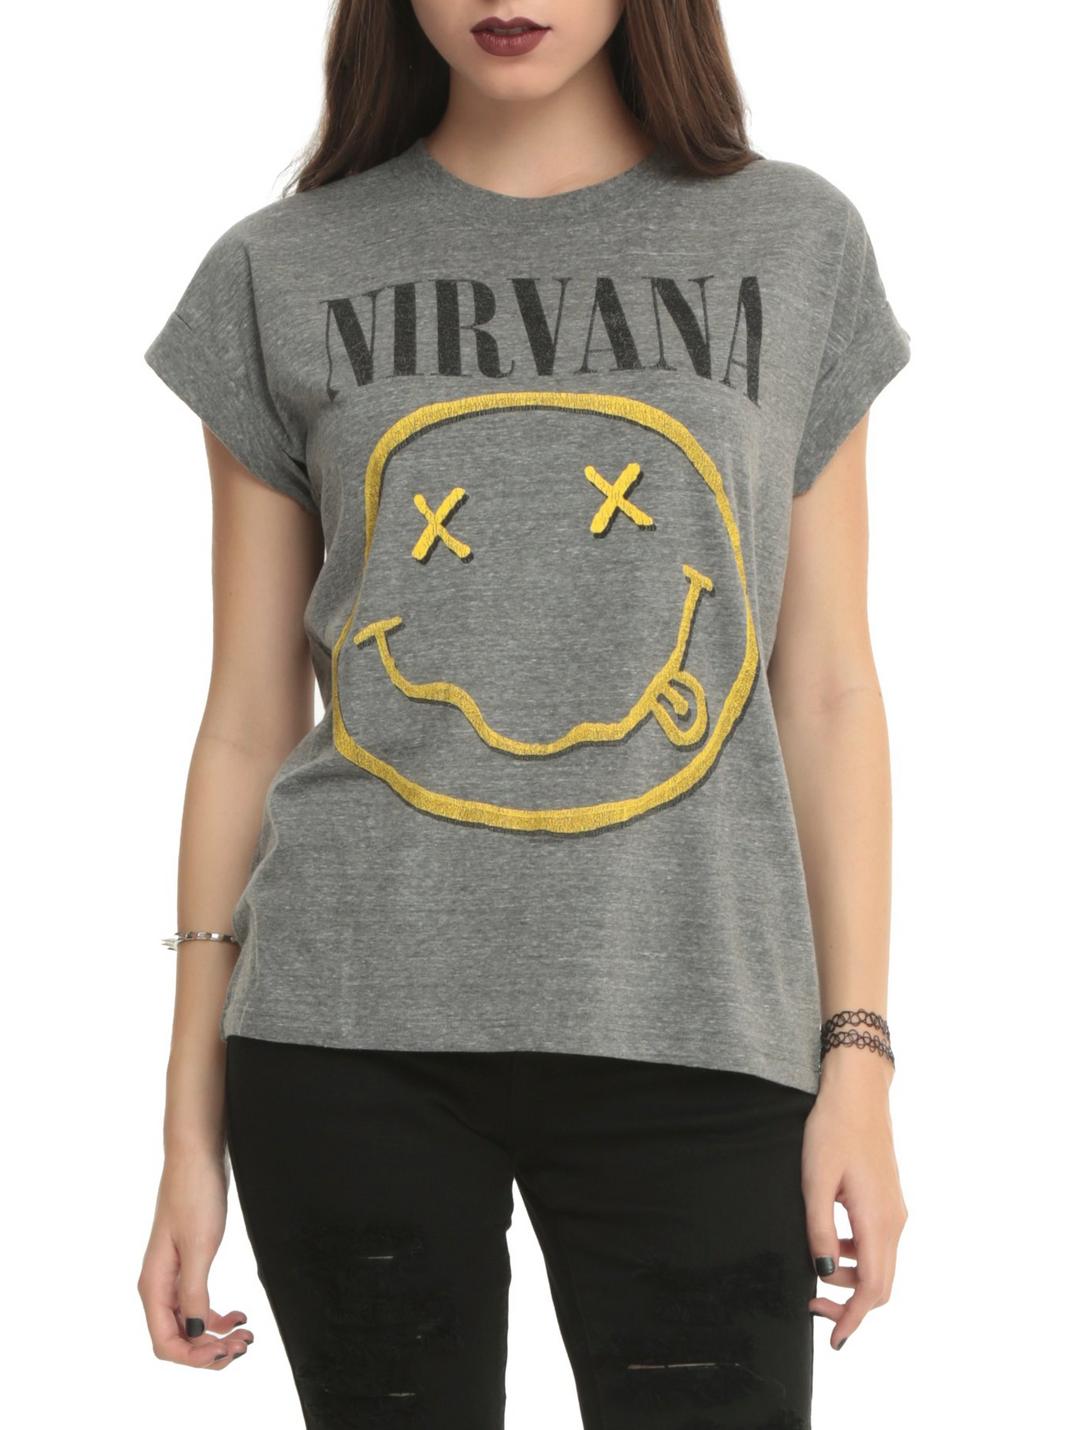 Nirvana Smiley Logo Girls Crop Top, HEATHER GREY, hi-res